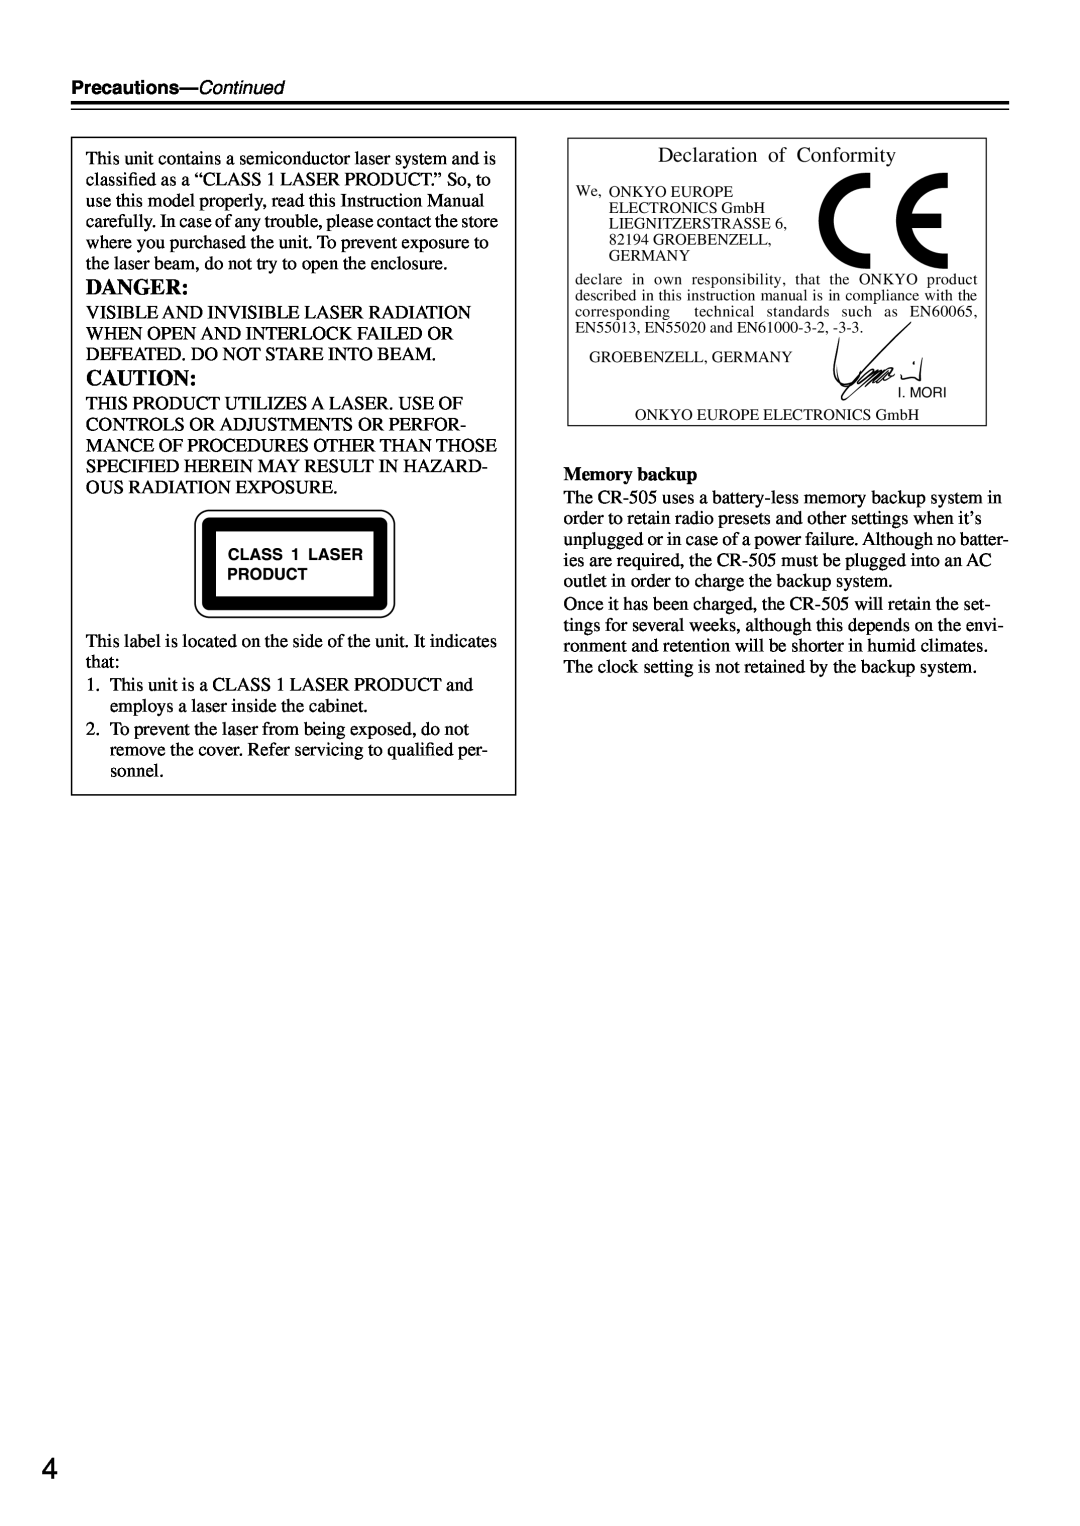 Onkyo CR-505 instruction manual Danger, Declaration of Conformity, Memory backup 